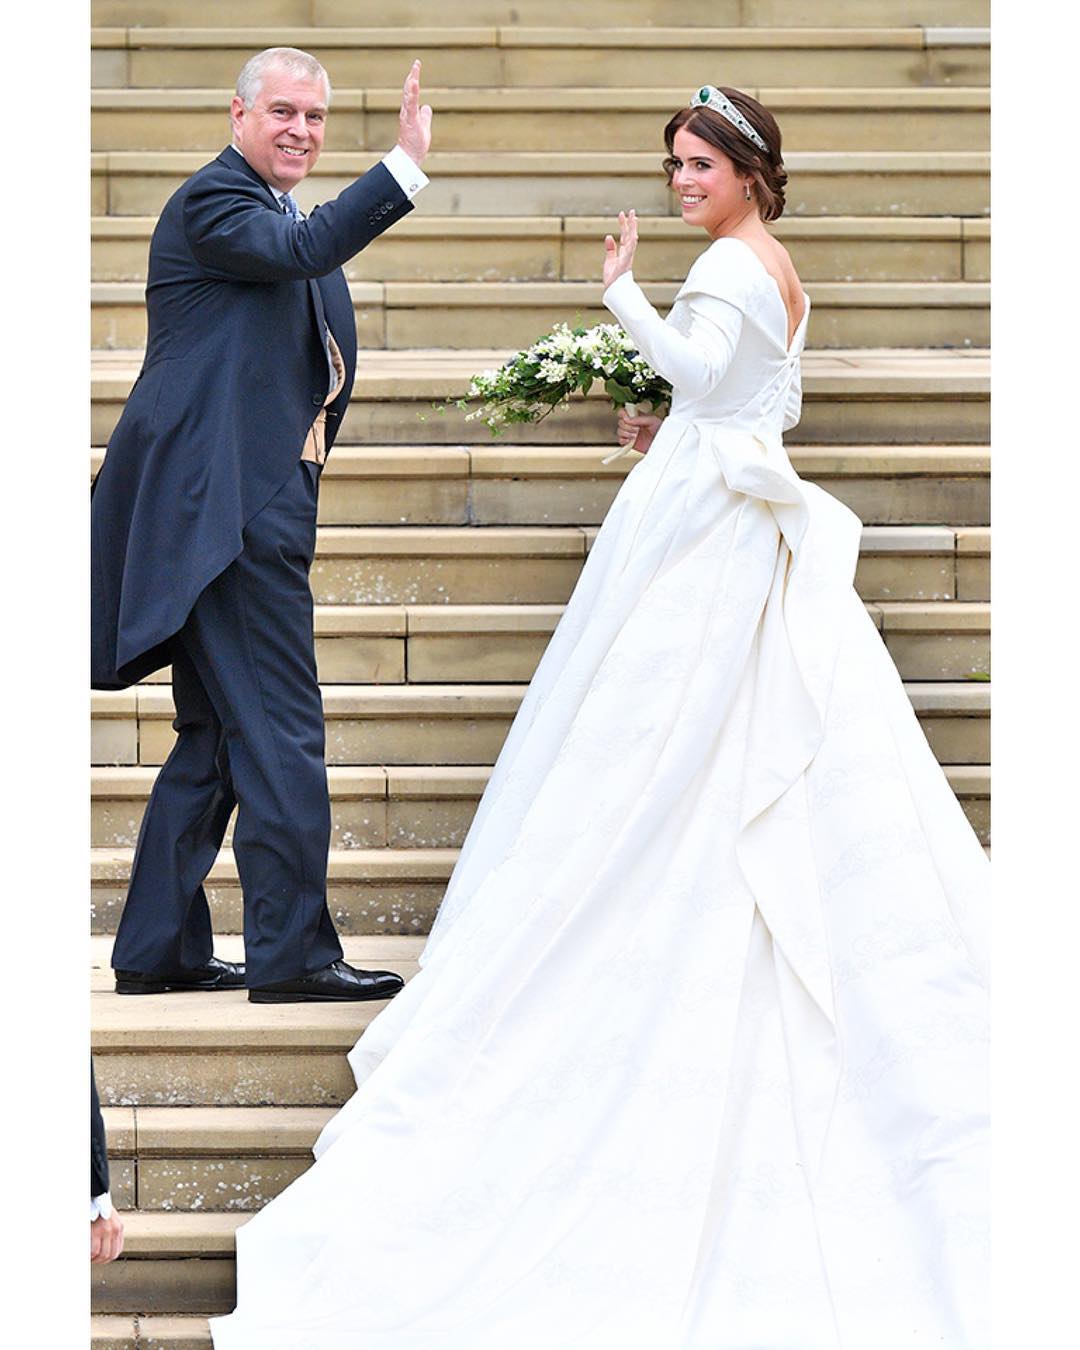 Voguejapan 10月12日ユージェニー オブ ヨーク 王女とジャック ブルックスバンクの結婚式が行われたエリザベス女王の次男アンドリュー王子の娘であるユージェニー王女がウェディ Wacoca Japan People Life Style